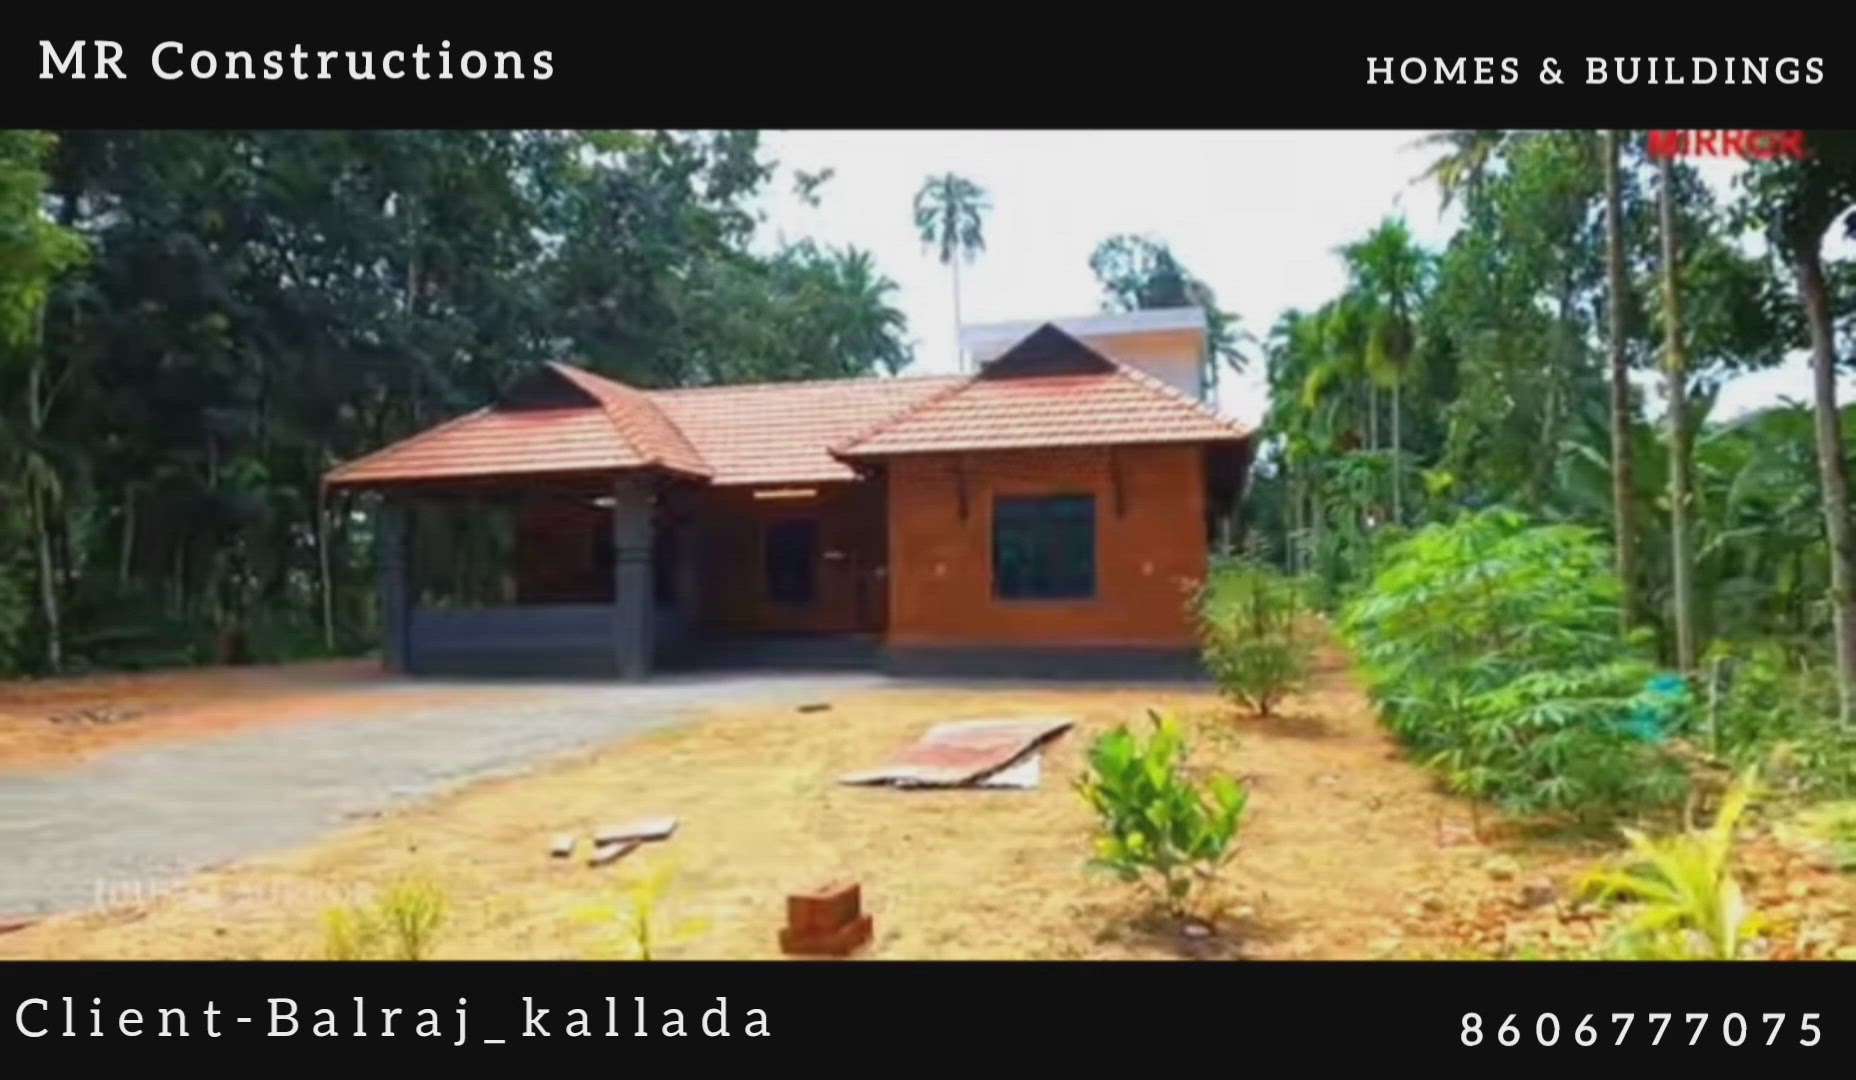 Semi traditional home  #40LakhHouse  #KeralaStyleHouse  #TraditionalHouse #keralahomeplans  #keralahomestyle  #keralastyle  #30LakhHouse  #MixedRoofHouse #everyone